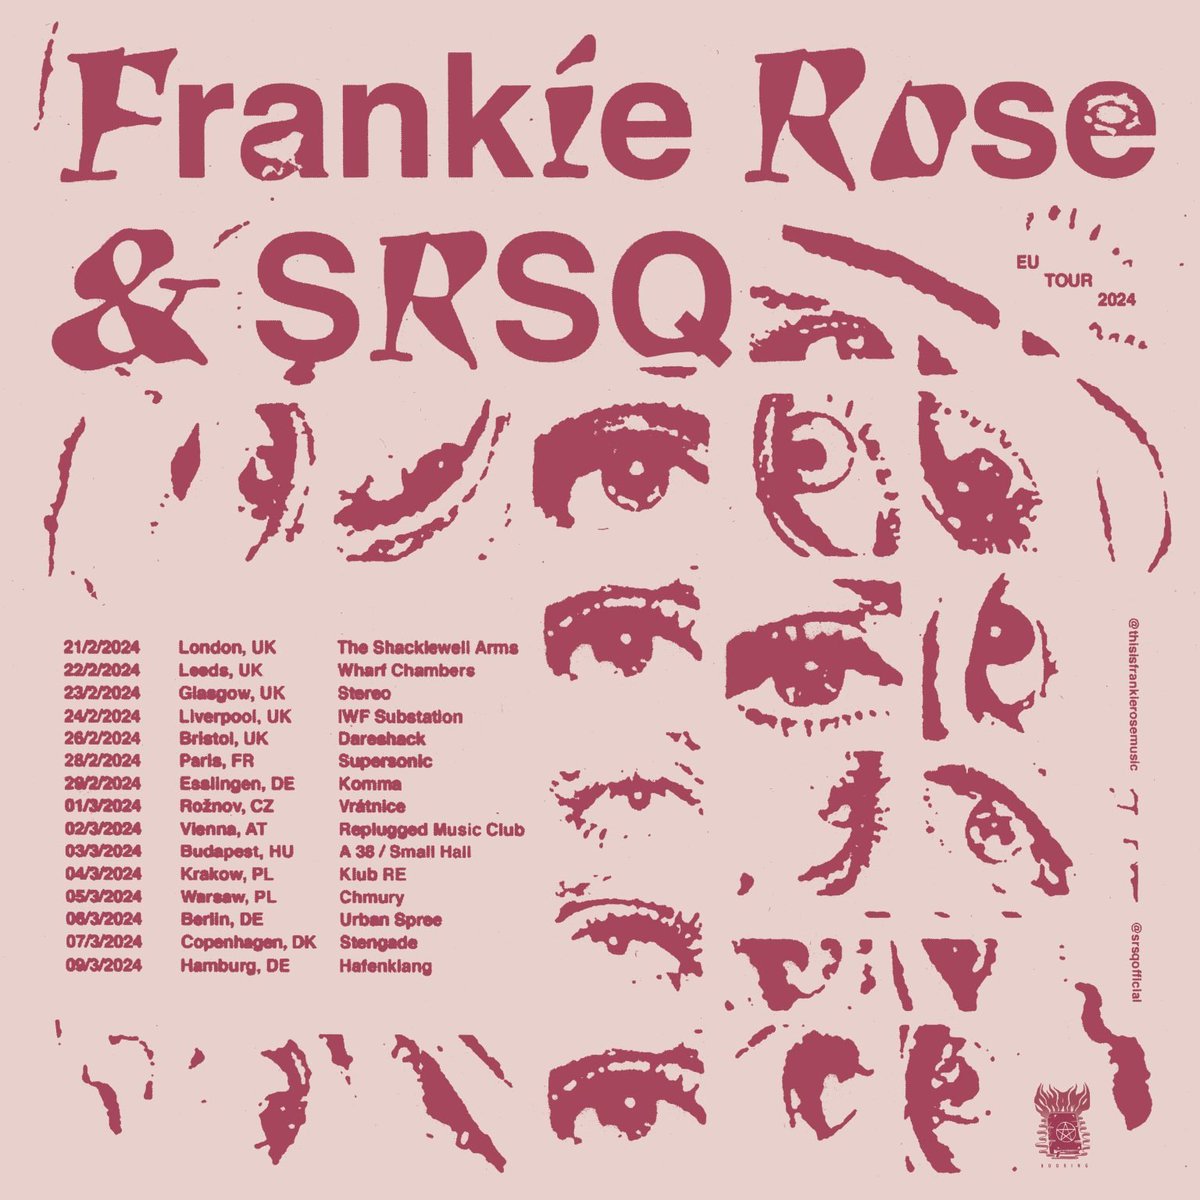 Frankie Rose kicks off her UK tour dates tonight!! 21/2 - London - @ShacklewellArms 22/2 - Leeds - @WharfChambersCC 23/2 - Glasgow - @stereoglasgow   24/2 - Liverpool - IWF Substation 26/2 - Bristol - @dareshack @NightSchoolRecs @heyfrankierose #livemusic #synthpop #music